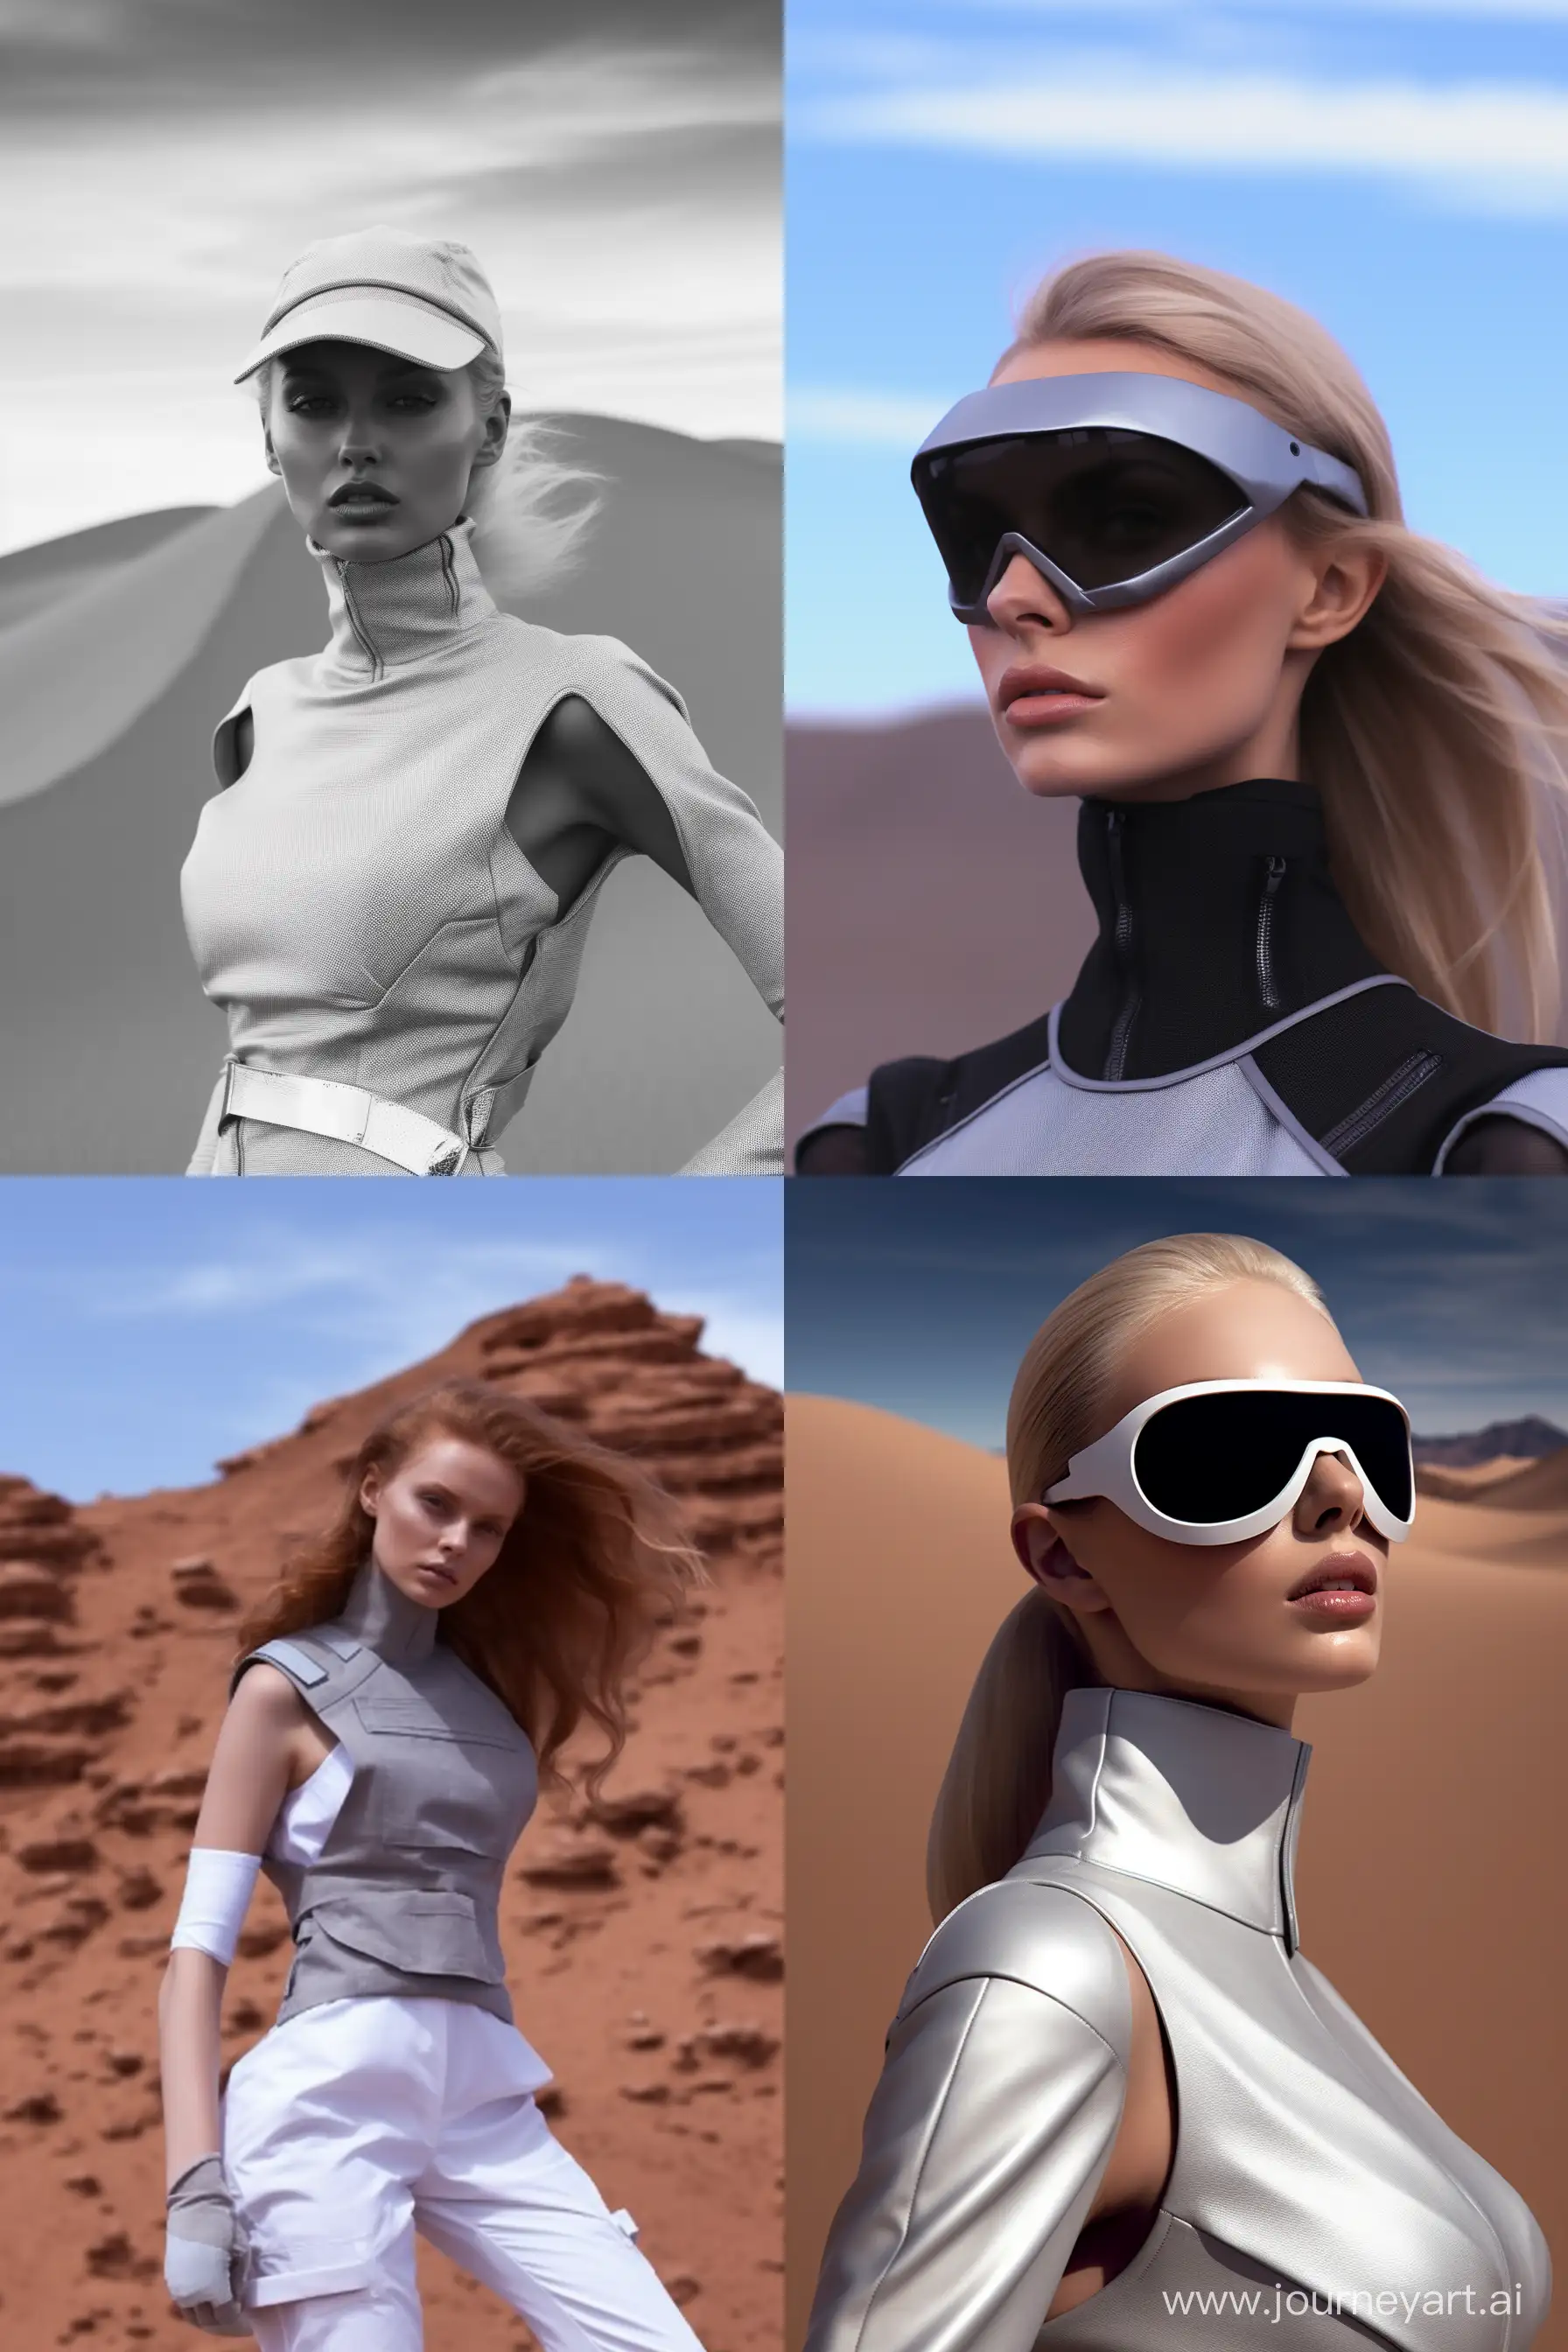 Futuristic-Fashion-Photoshoot-on-Mars-Elegant-White-Woman-in-Minimalist-Grey-Attire